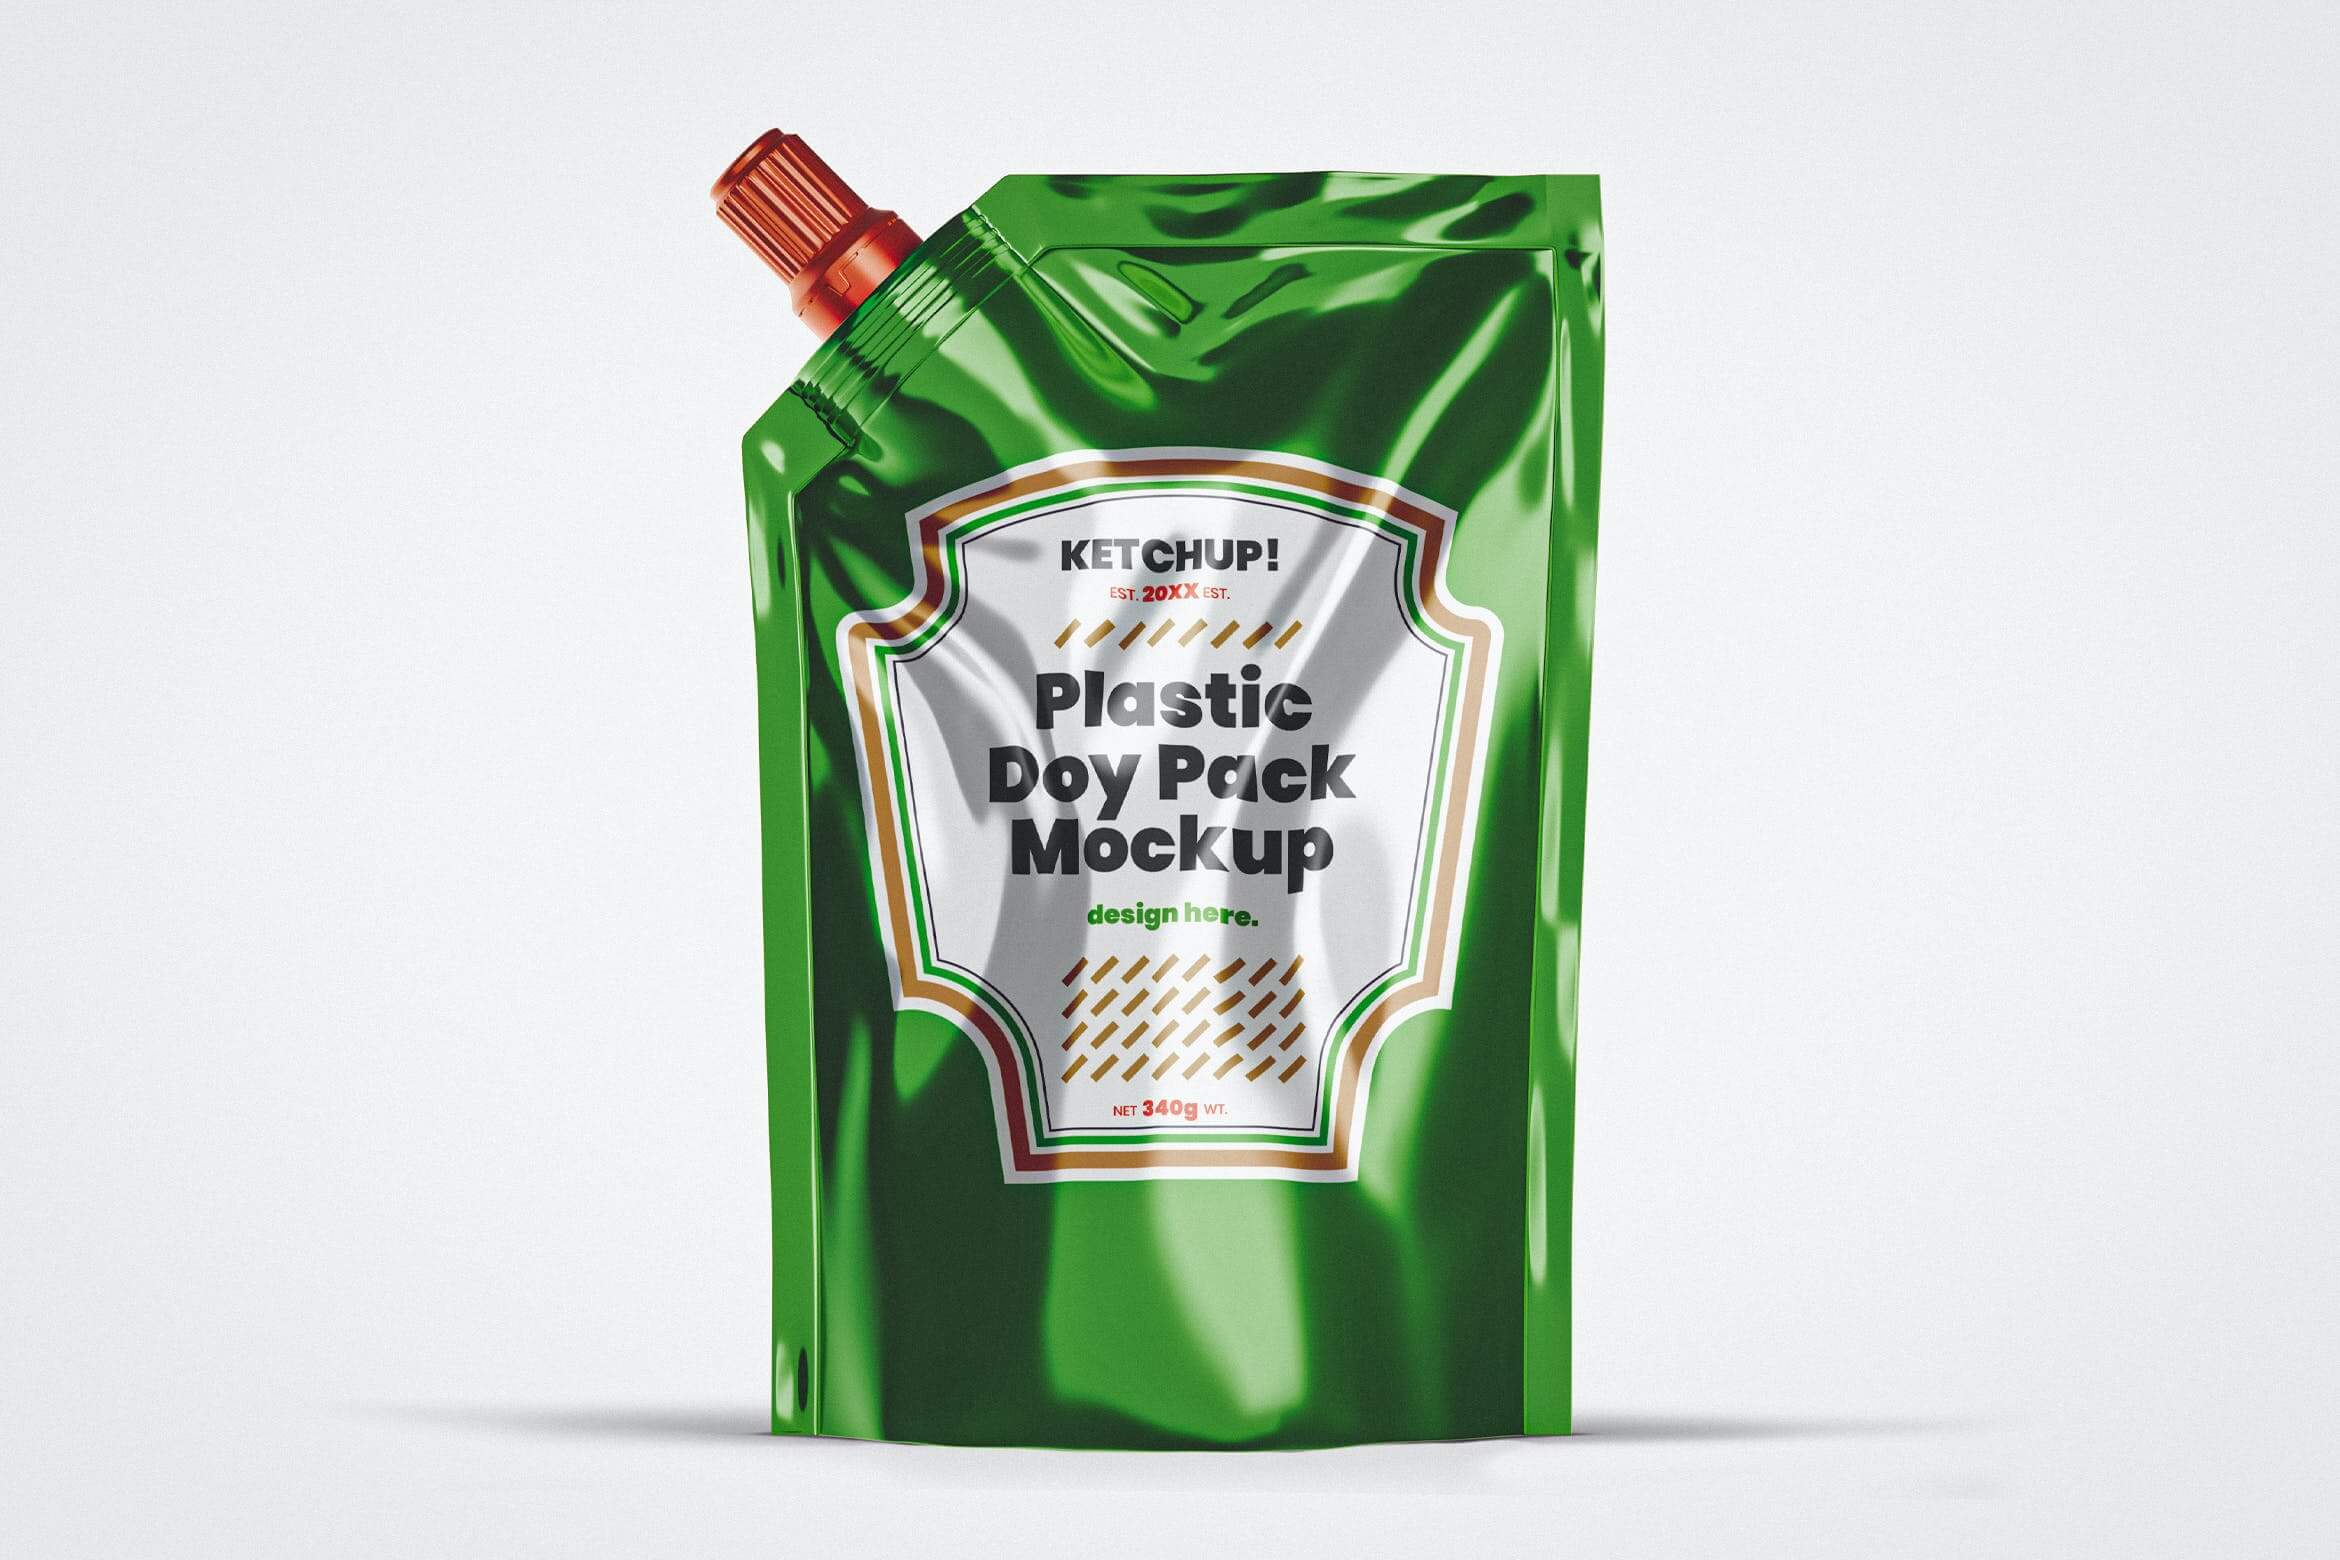 酱汁塑料模型模板素材模板Sauce Plastic Doypack Mockup Template插图